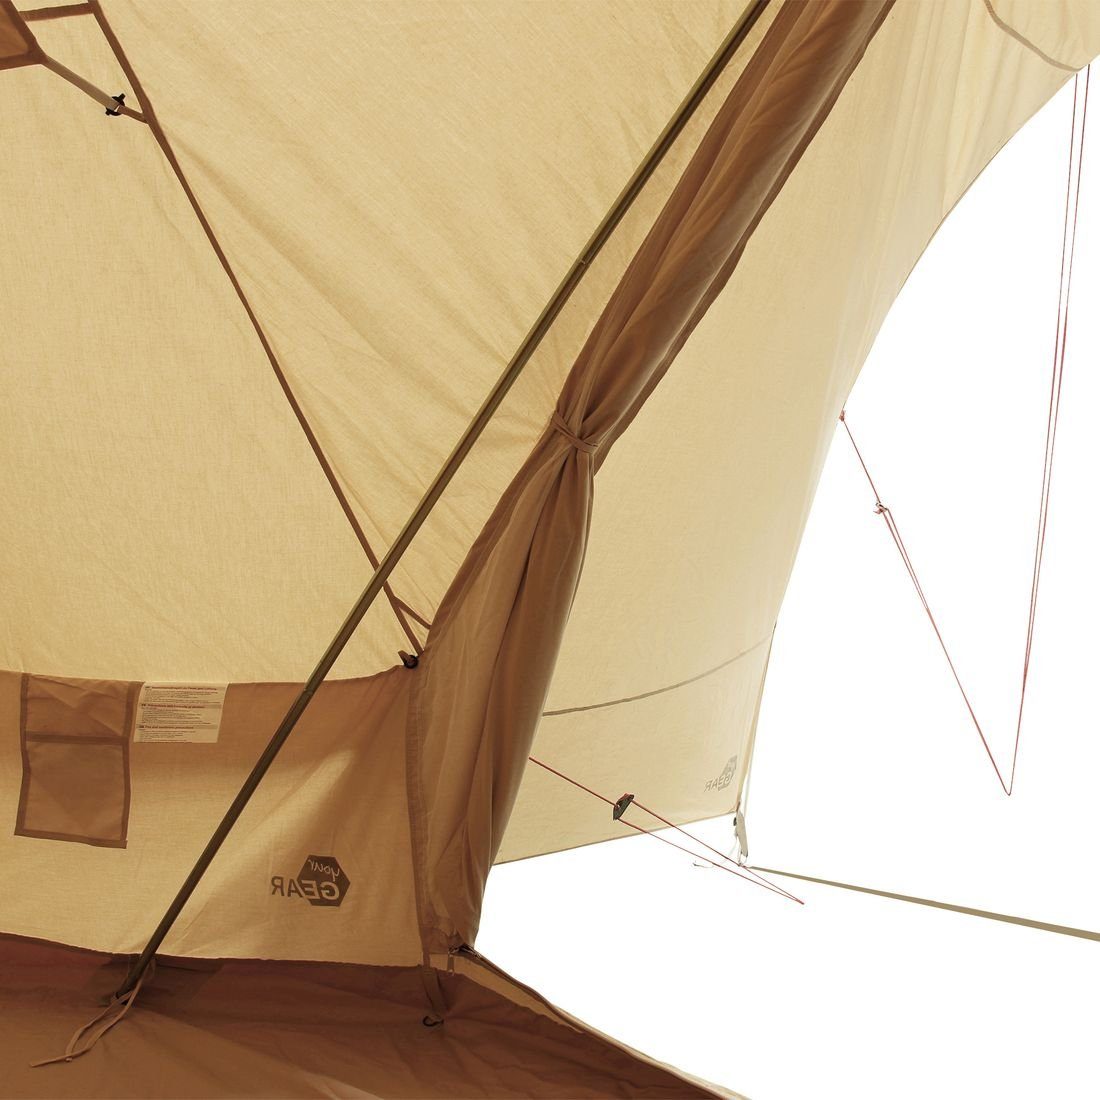 Camping Tipi mit Desert Baumwolle yourGEAR Vordach, 8 Personen: Pro 8 Tipi-Zelt UV50+ yourGEAR Zelt